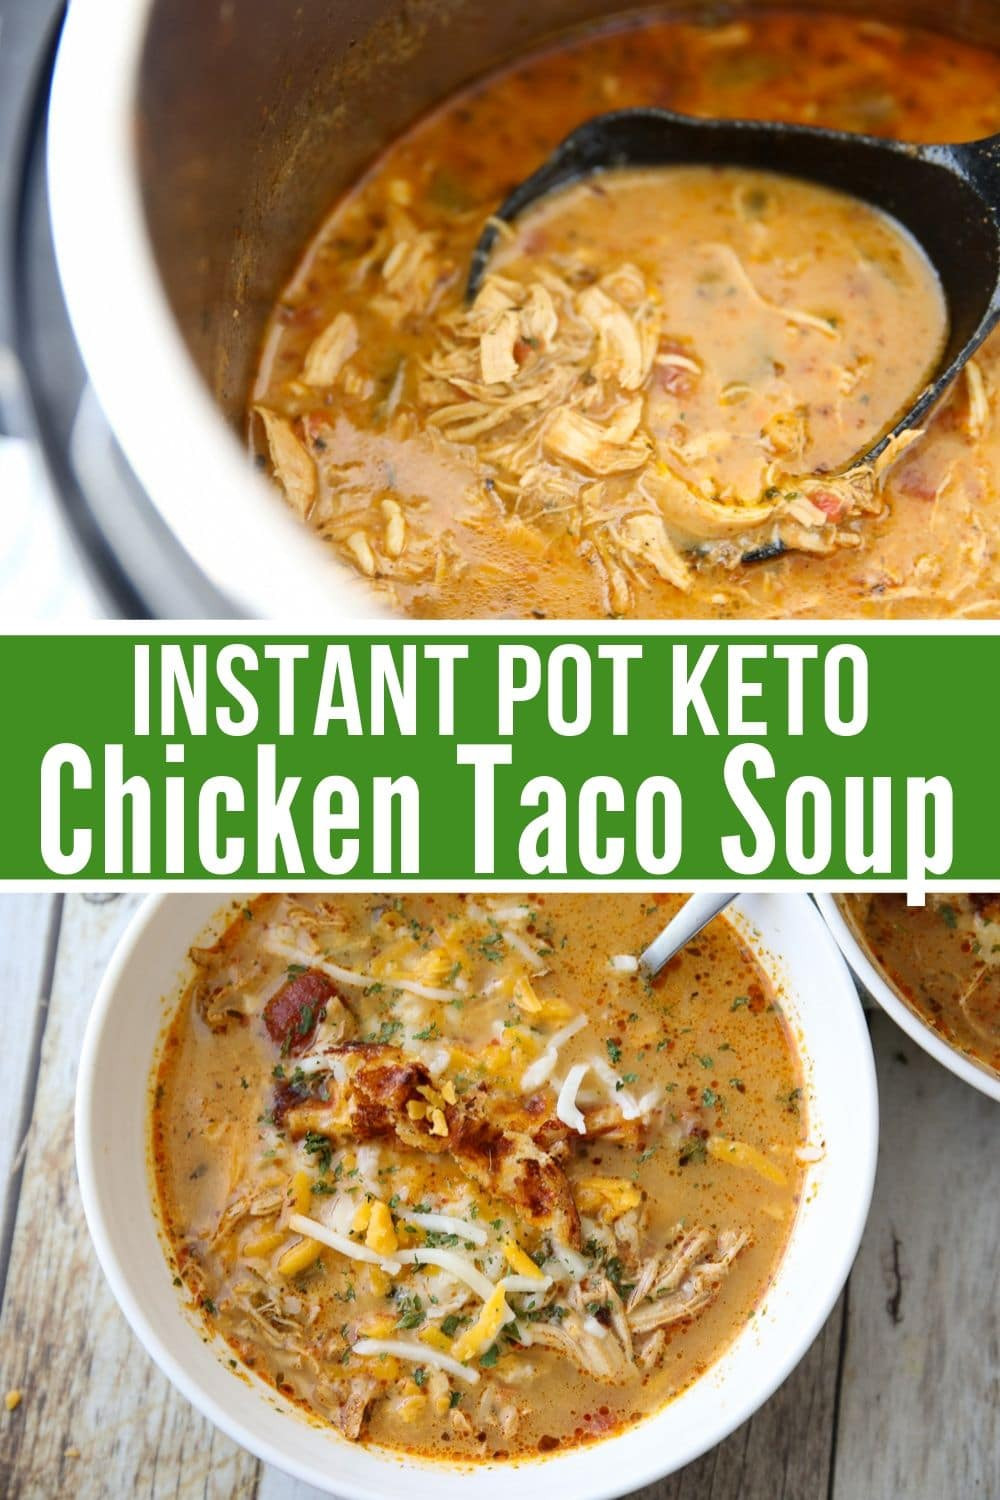 Crock Pot Keto Soup Recipes
 Best Keto Chicken Taco Soup Recipe Instant Pot or Crock